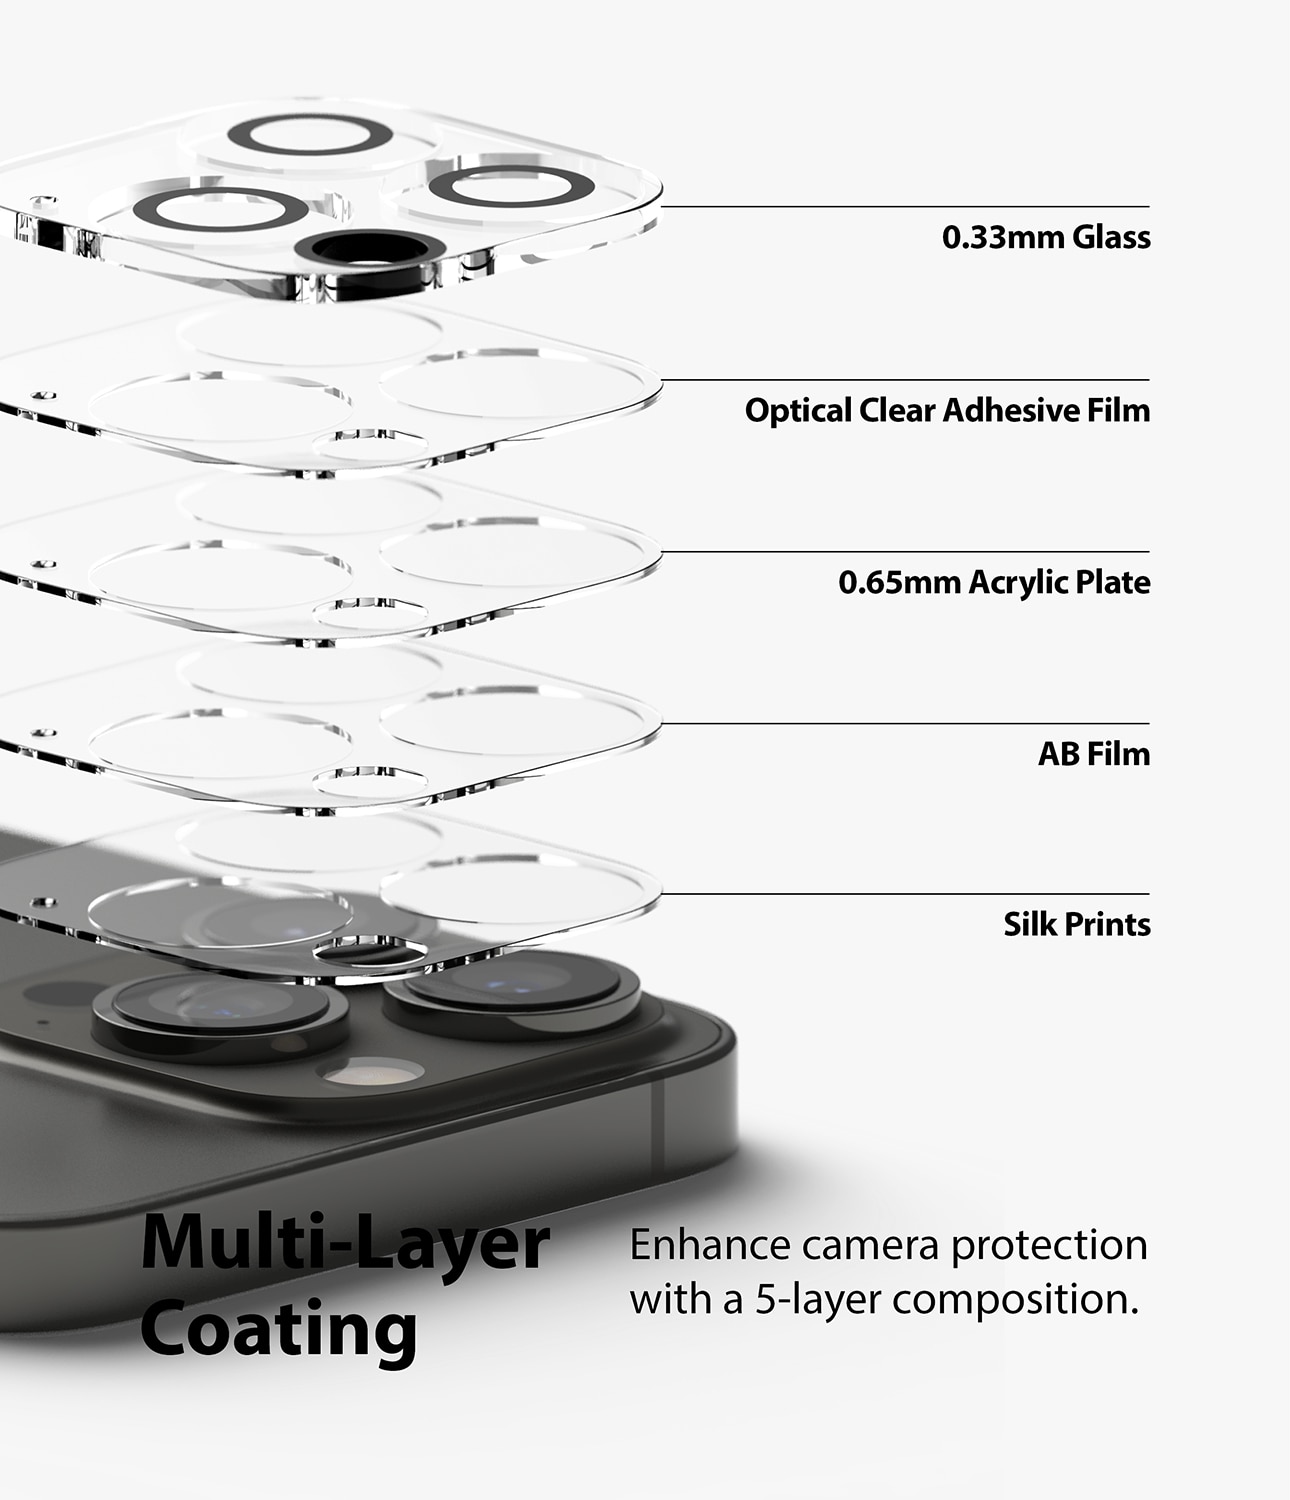 Camera Protector Glass (2 pezzi) iPhone 13 Pro